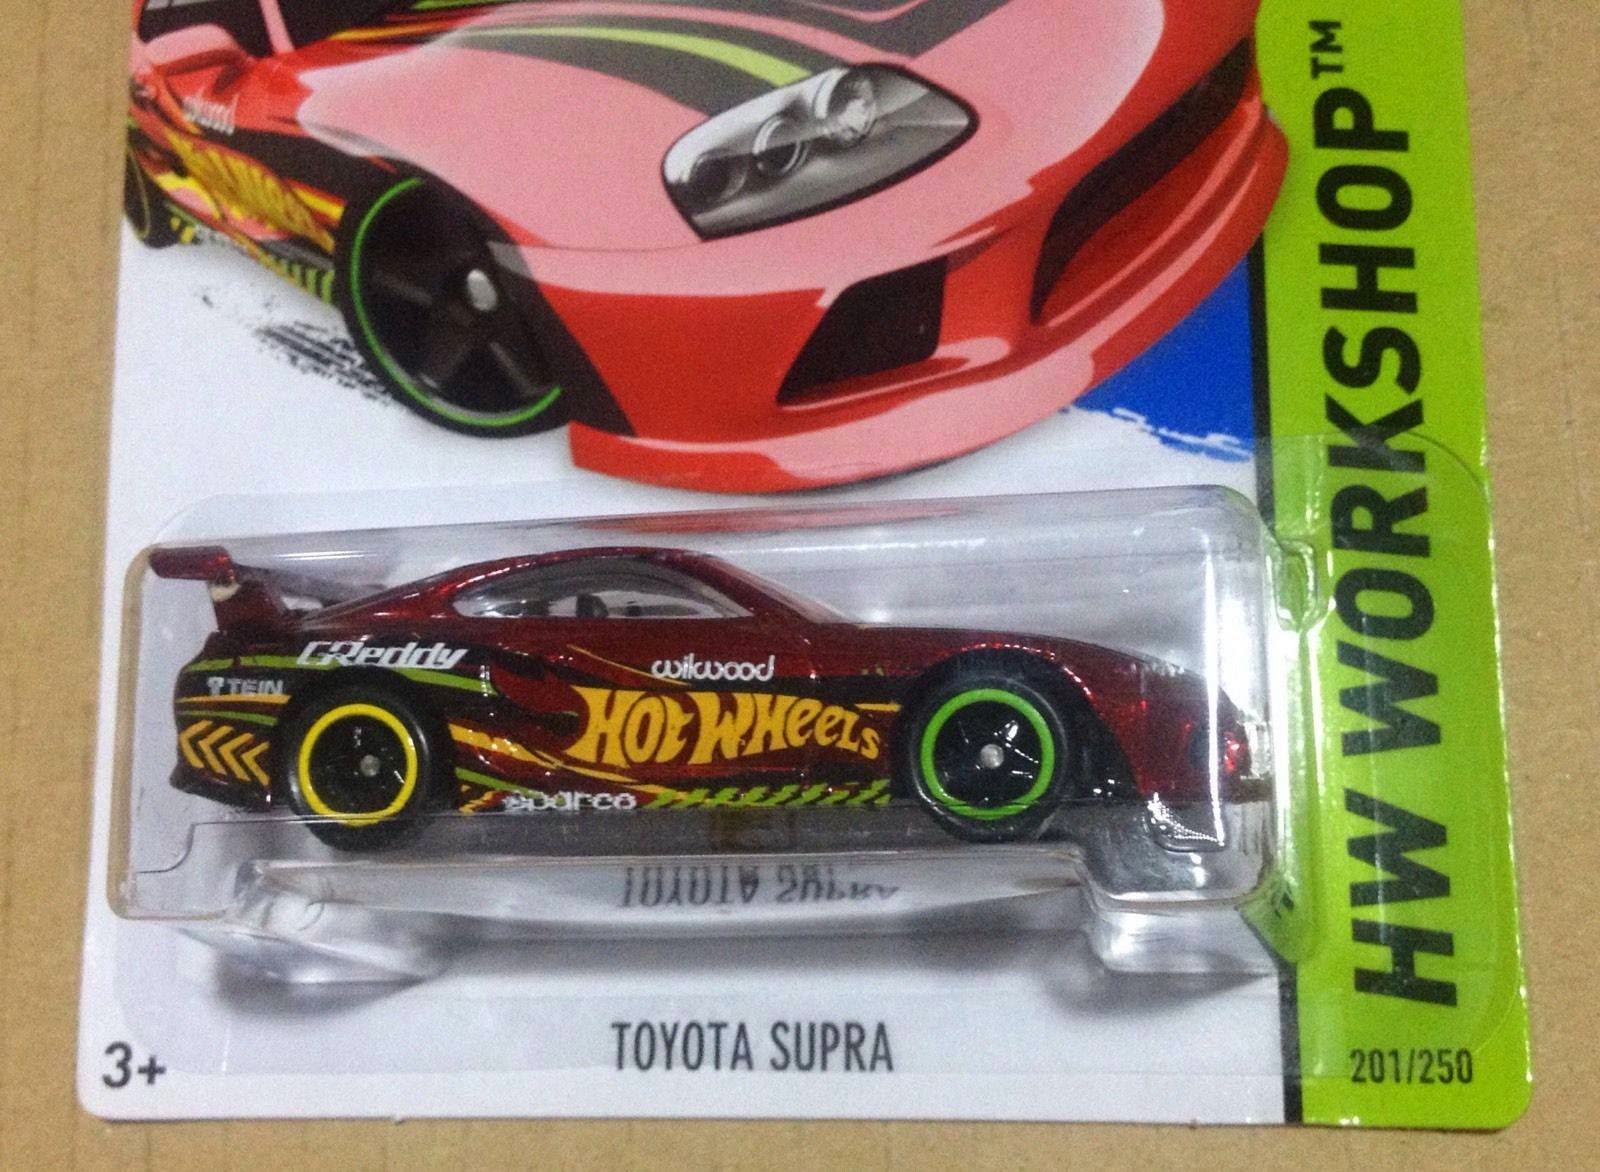 Just Unveiled The TRUE Hot Wheels Toyota Supra Super Treasure Hunt